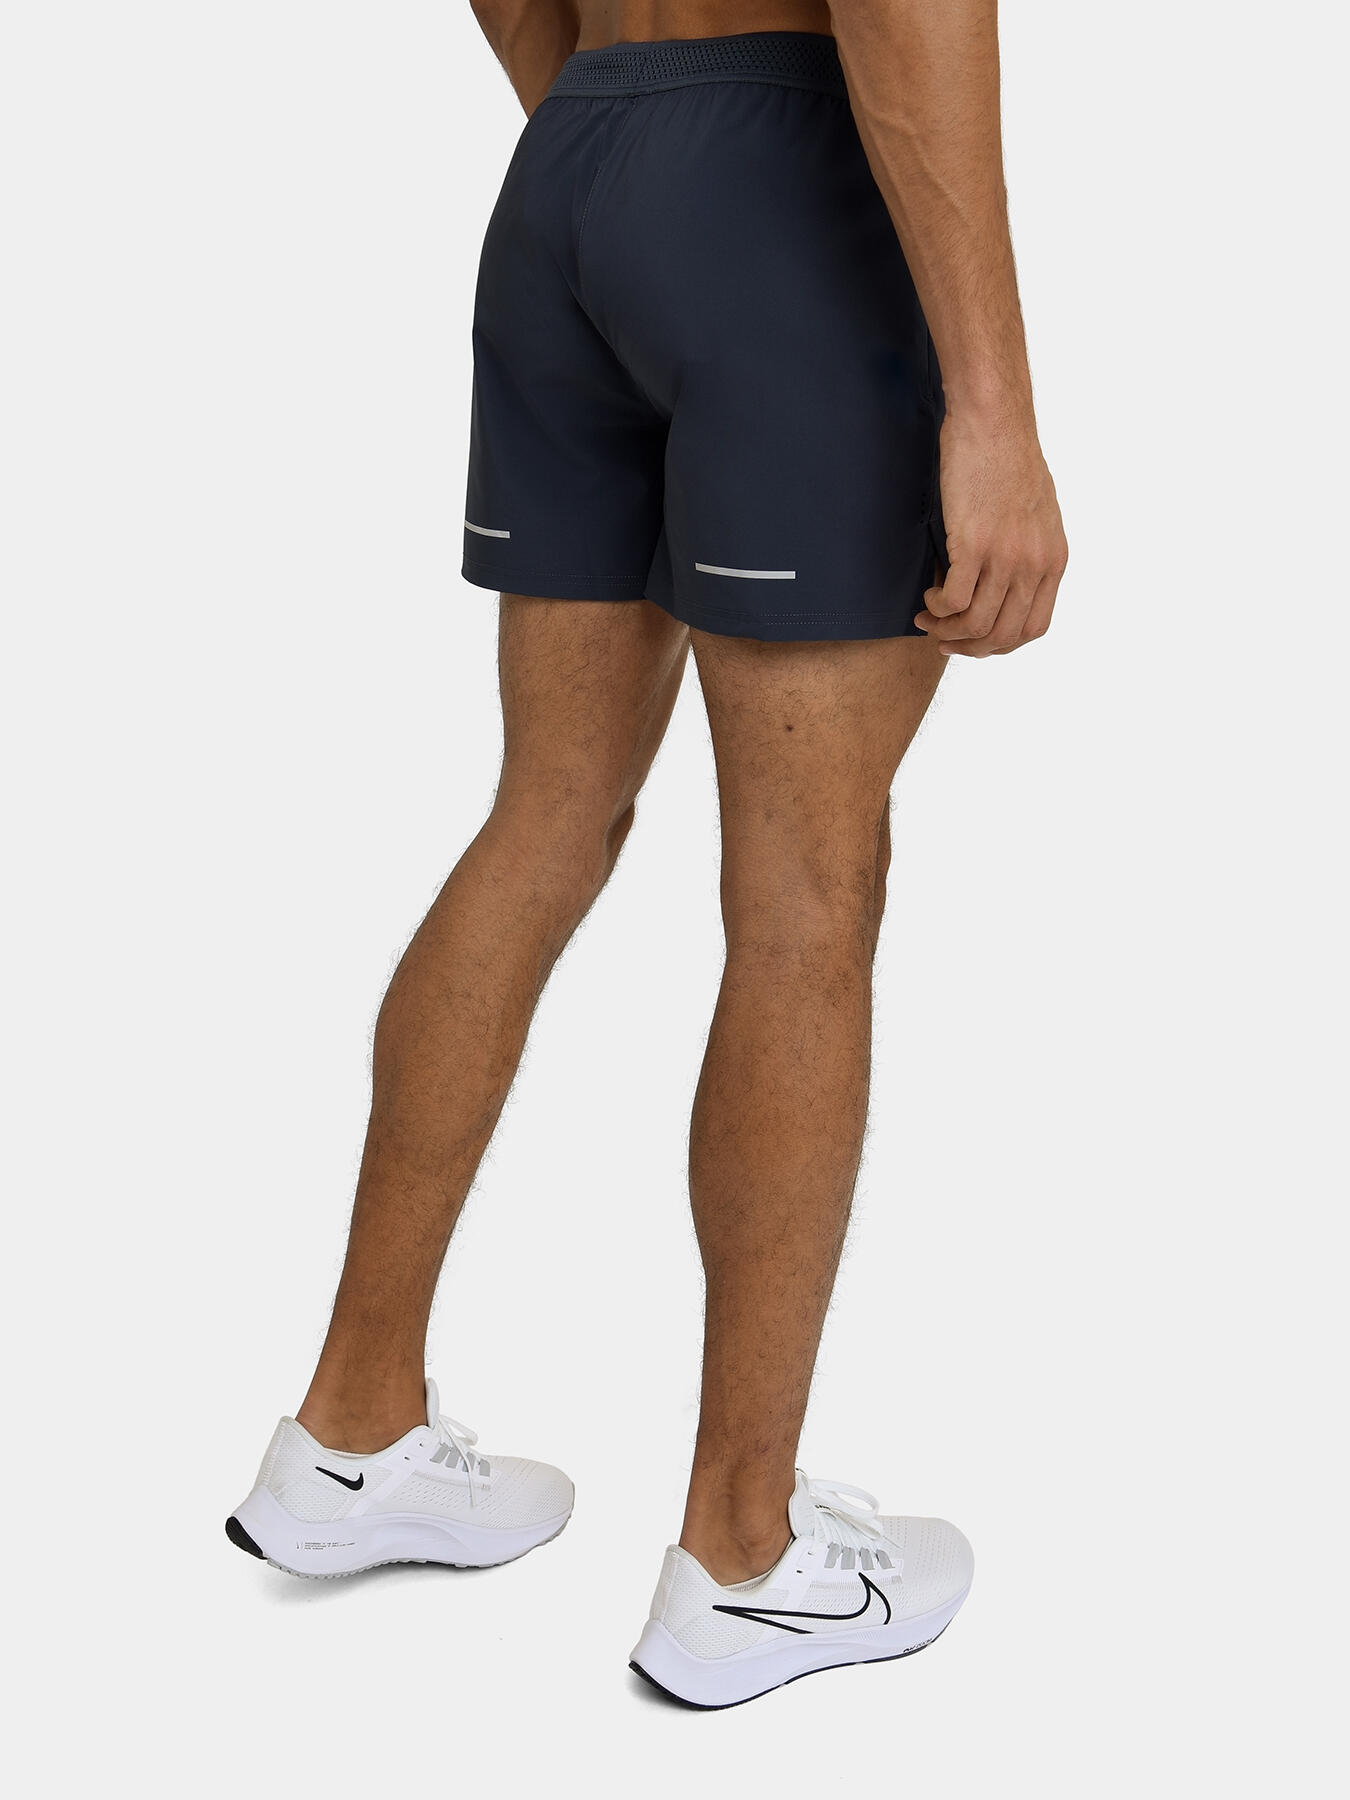 Men's Flyweight Running Shorts with Zipped Pockets - Smoke Grey 2/5